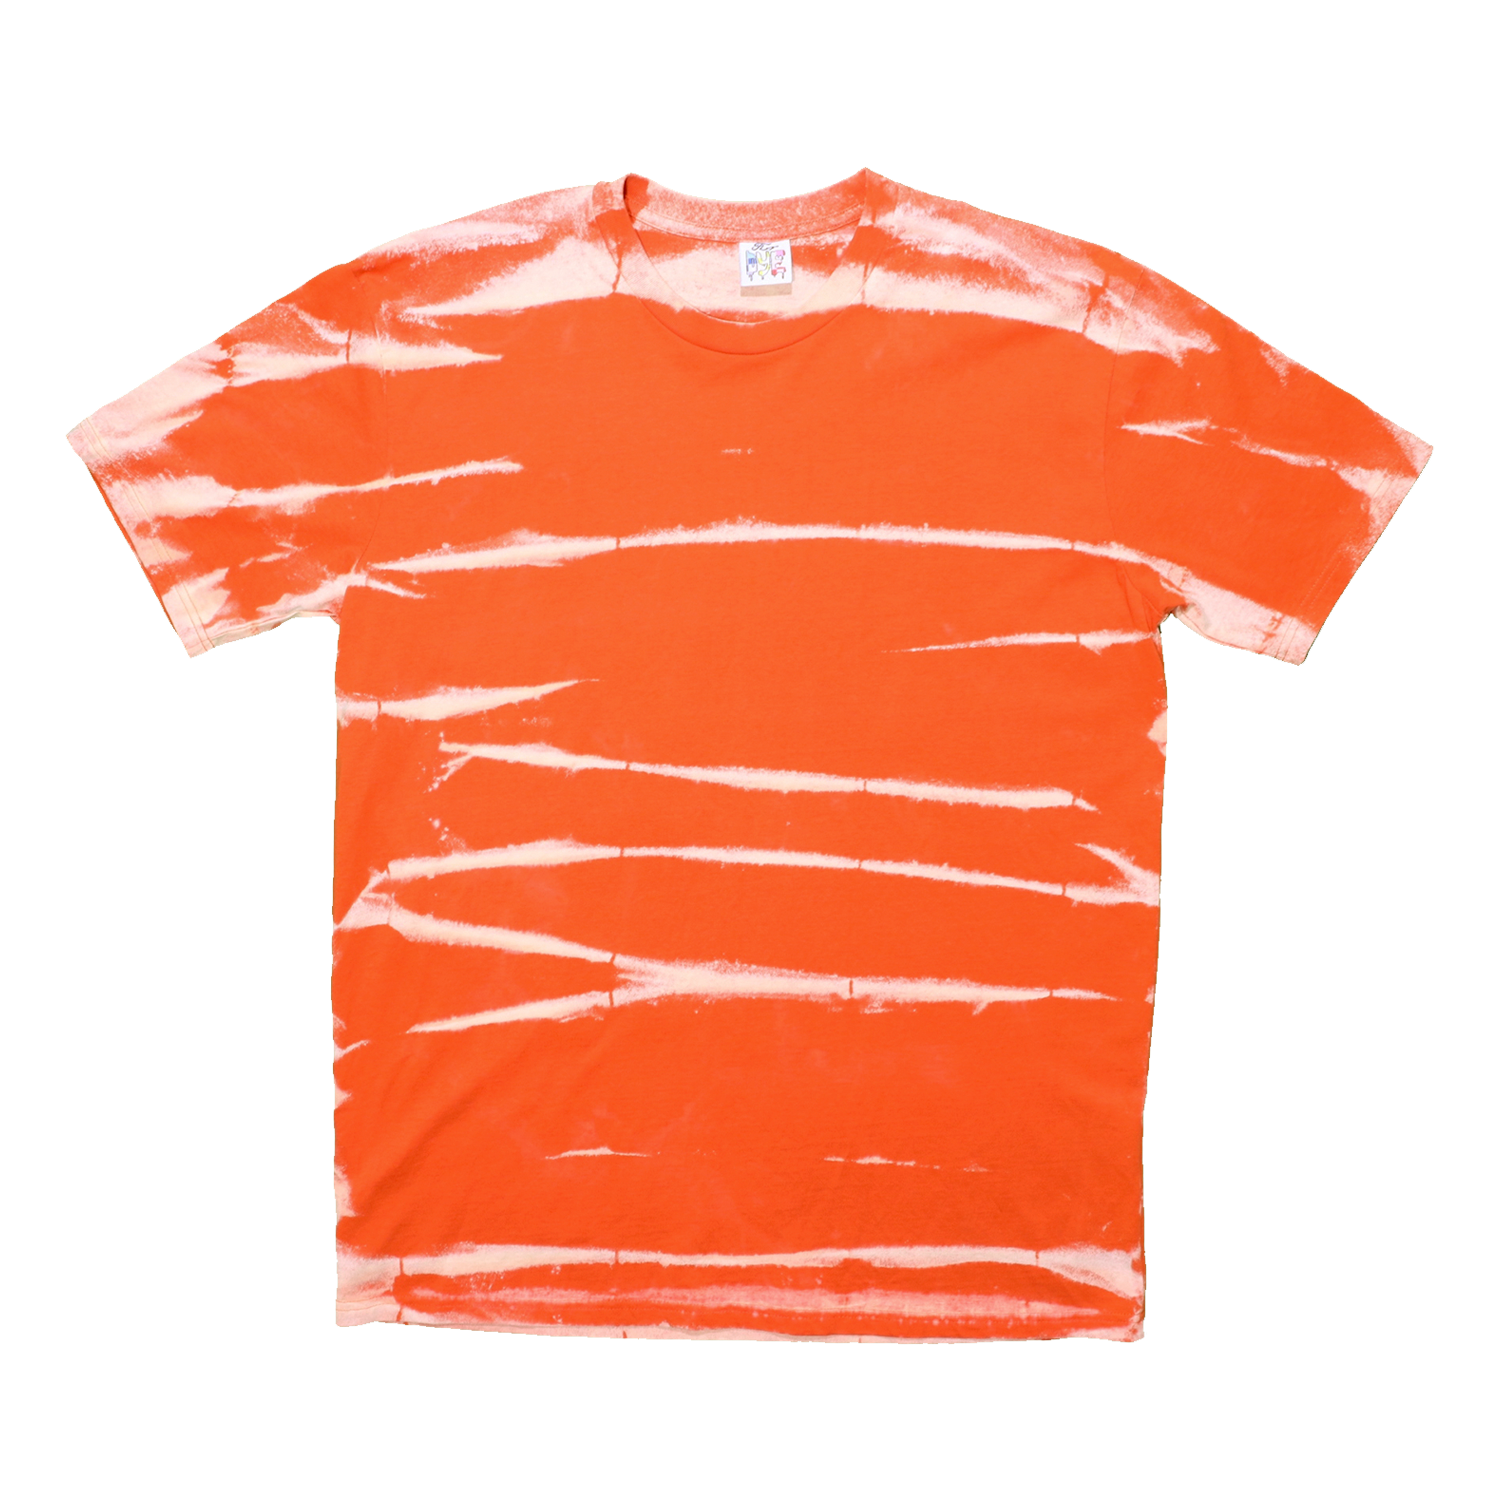 Orange Soda Shirt